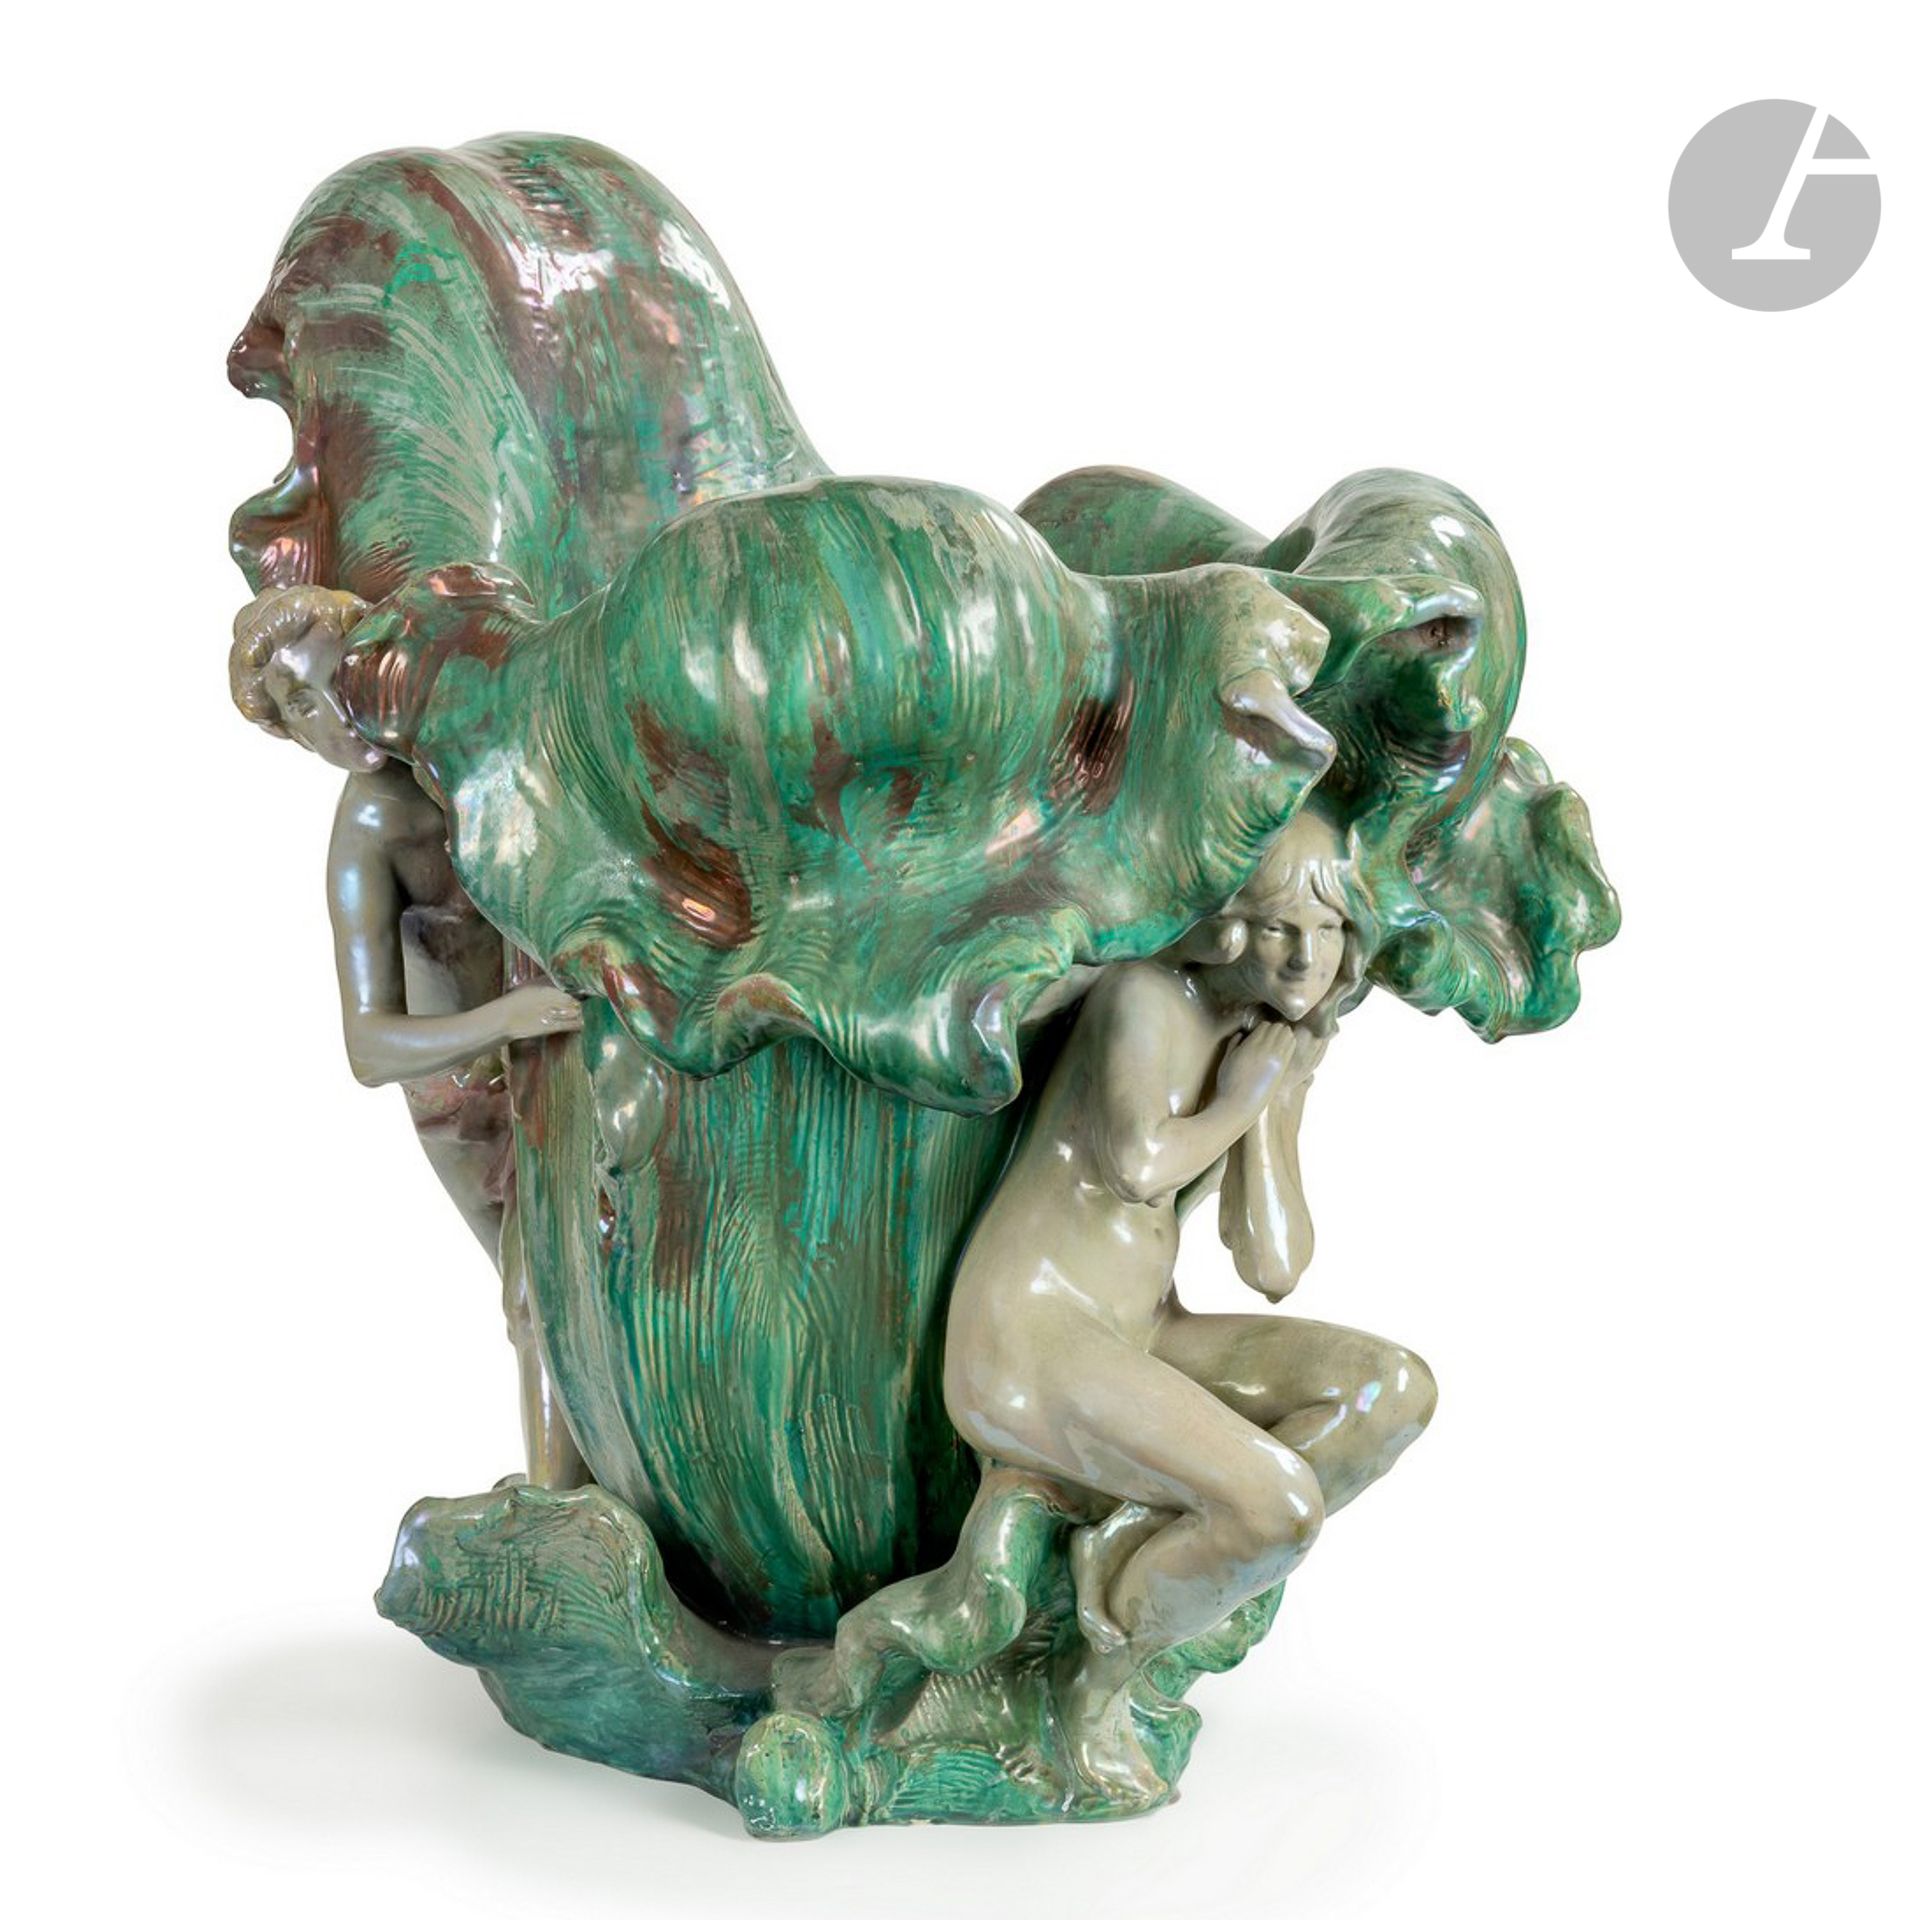 Null 
新艺术主义时期的作品

这两个来源，大约在1900年

壮观的花瓶或罐子；两个仙女被处理成圆形。

多色珐琅彩陶瓷证明，具有丰富的金属和彩虹色效果。&hellip;